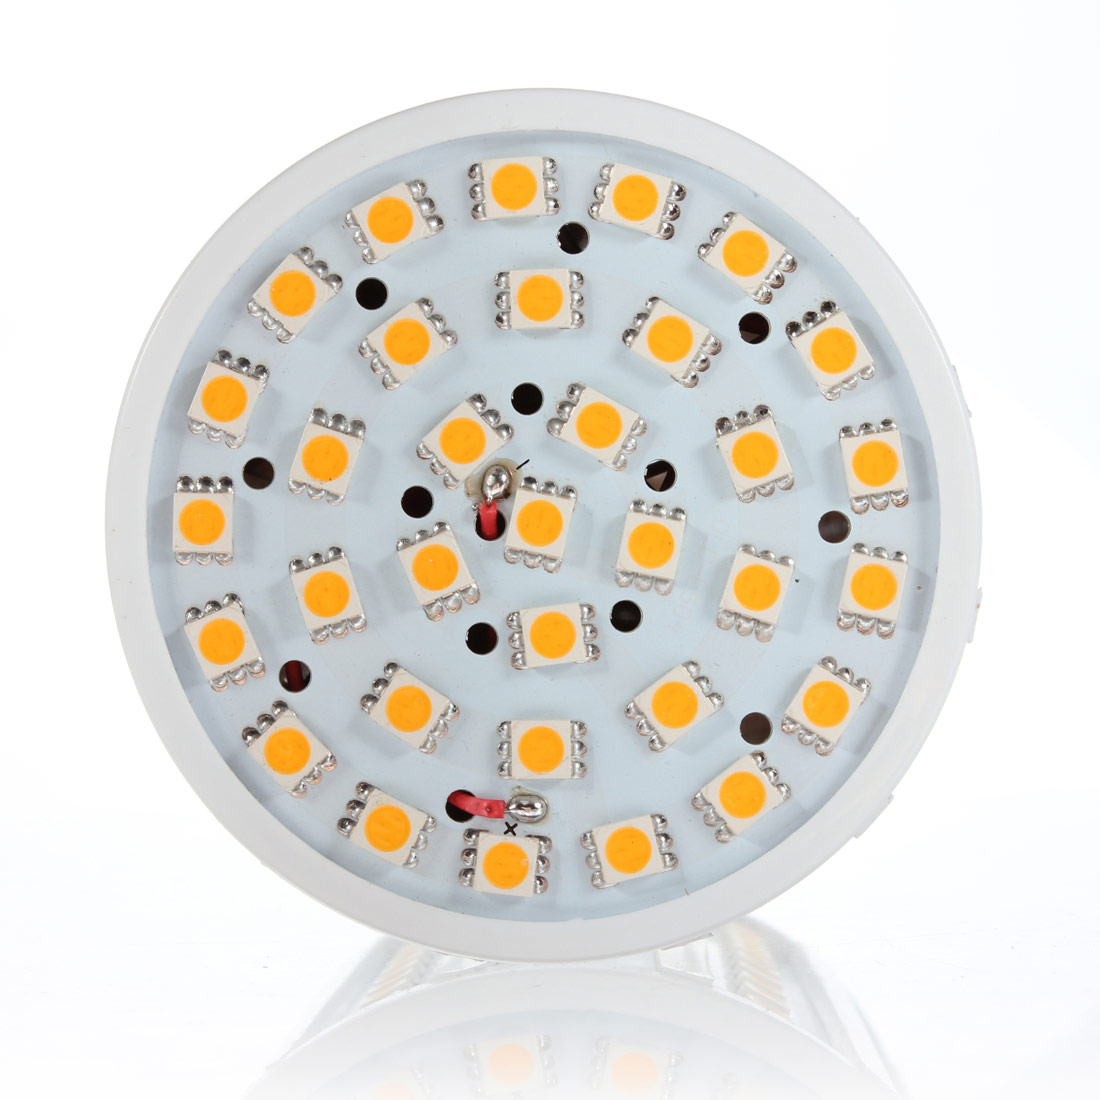 B22-30W-WhiteWarm-White-5050-SMD-165-LED-Corn-Bulb-Lamps-AC110V-908165-8